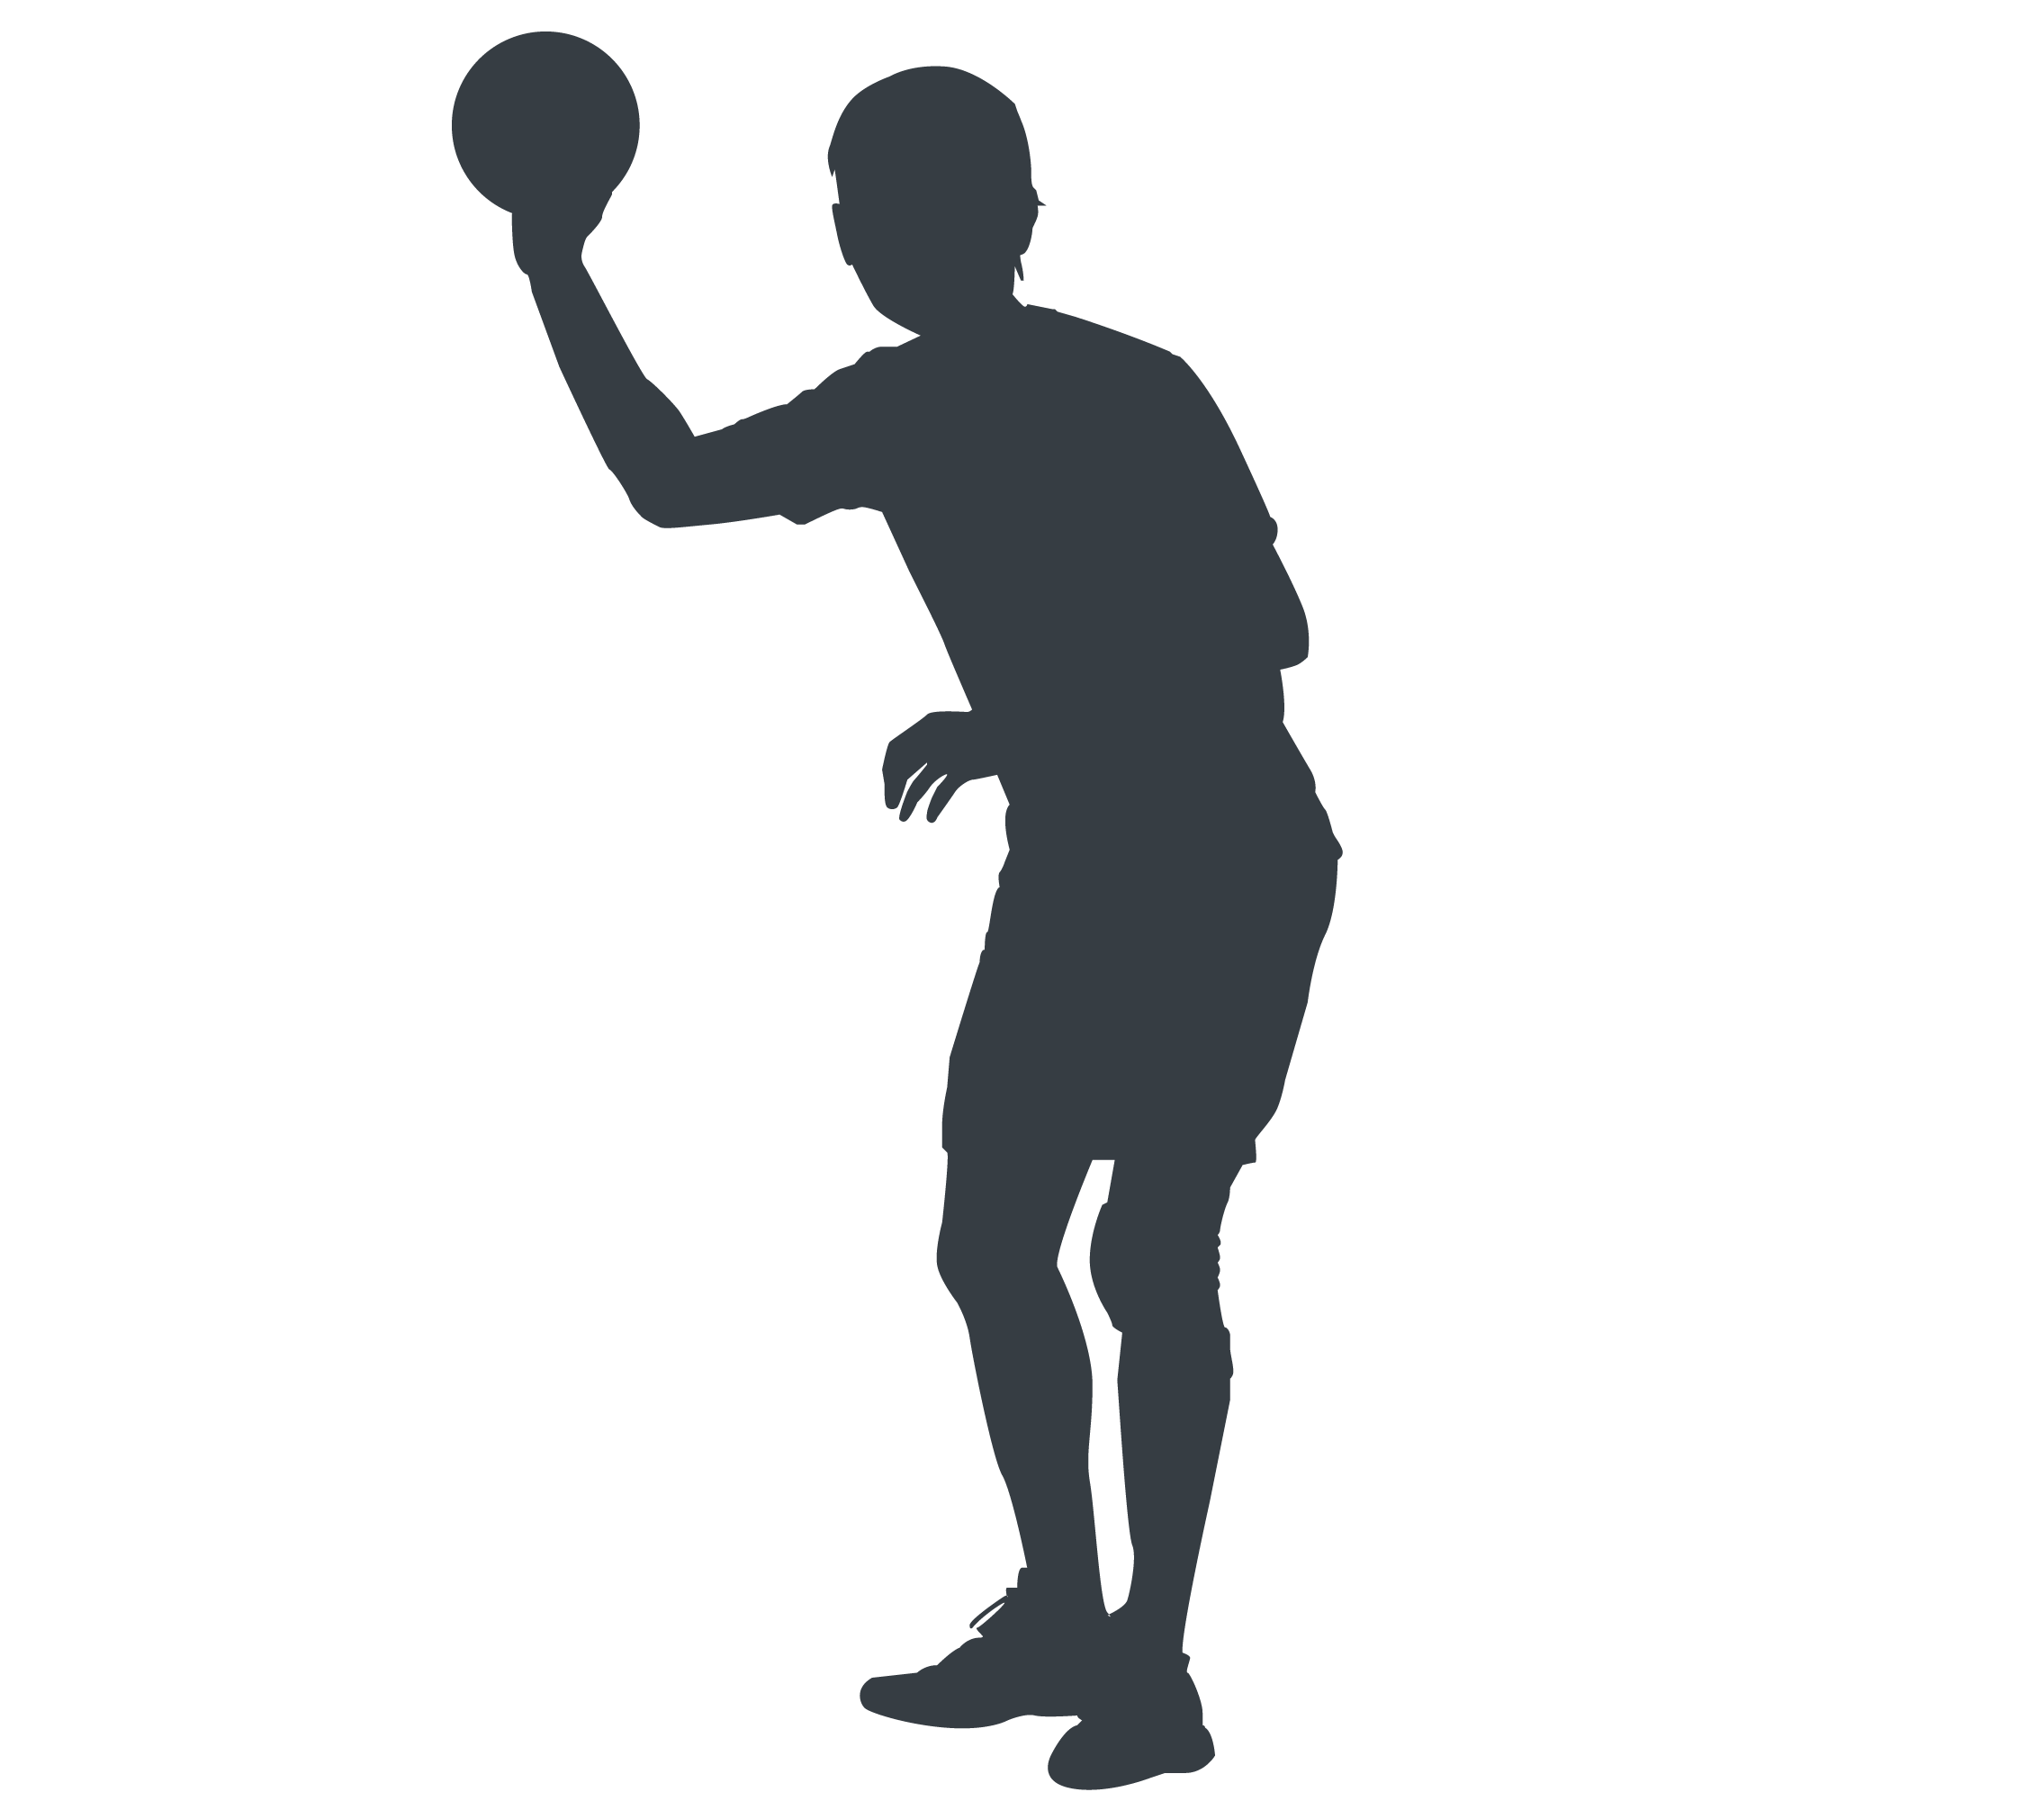 Athlete silhouette